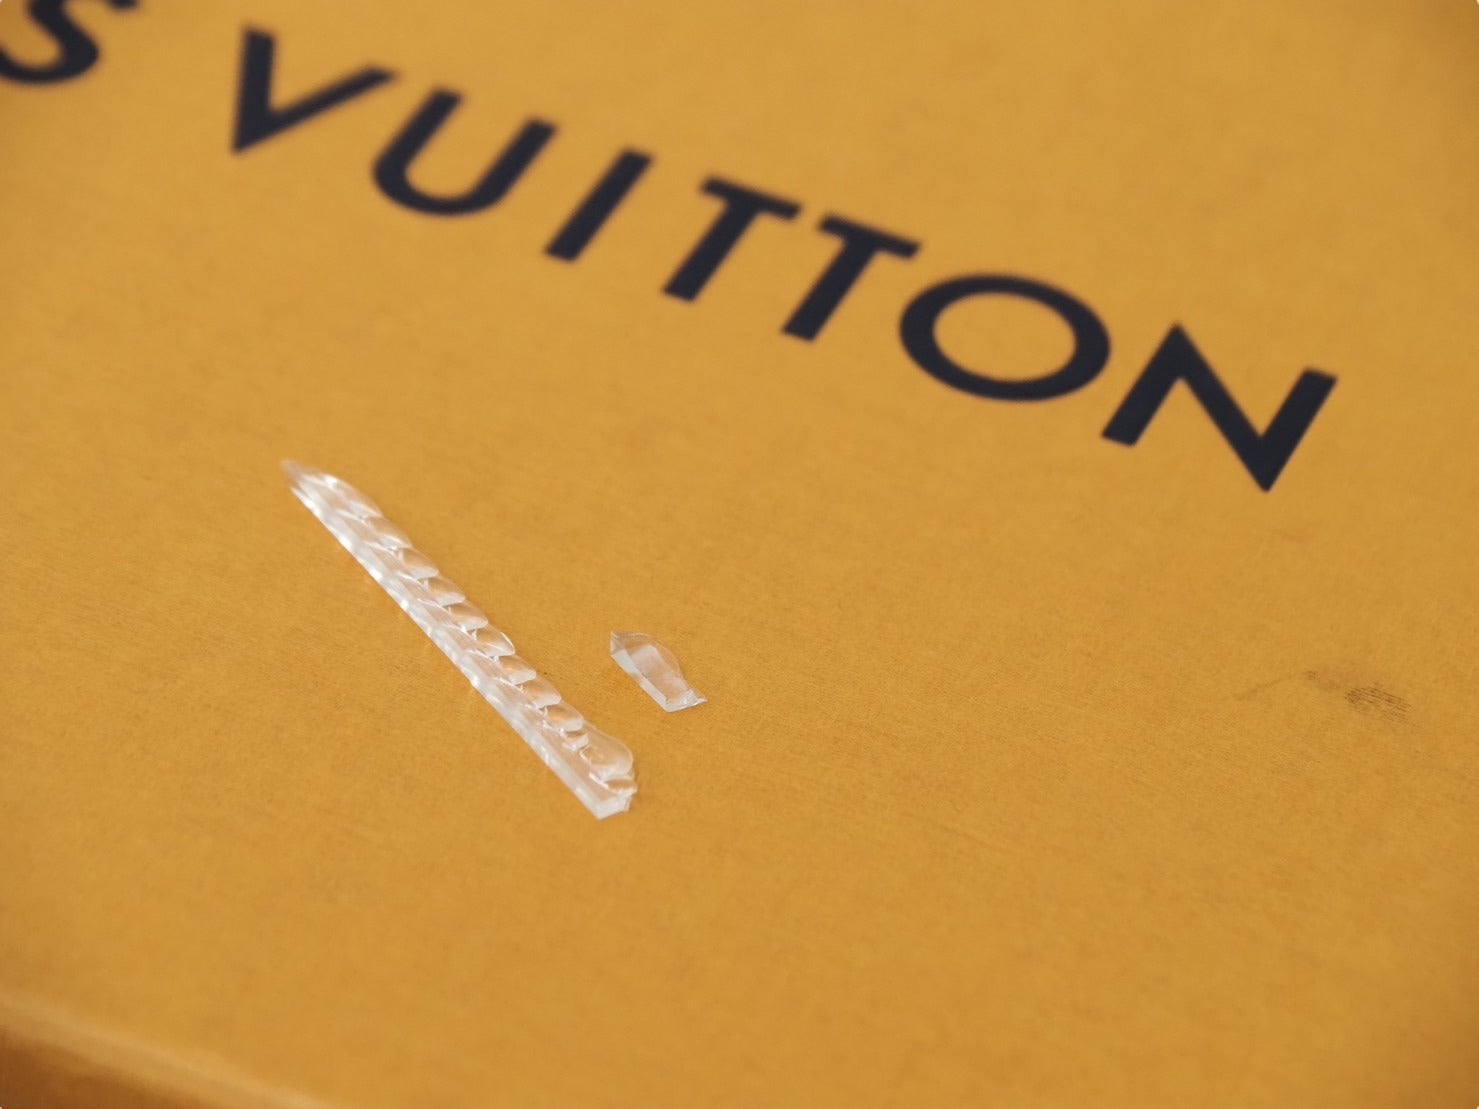 LOUIS VUITTON ルイヴィトン 靴下 雑貨 ショセット・セットアーカイブ ソックス MP3136 ゴールド 美品 中古 54221 –  Casanova Vintage